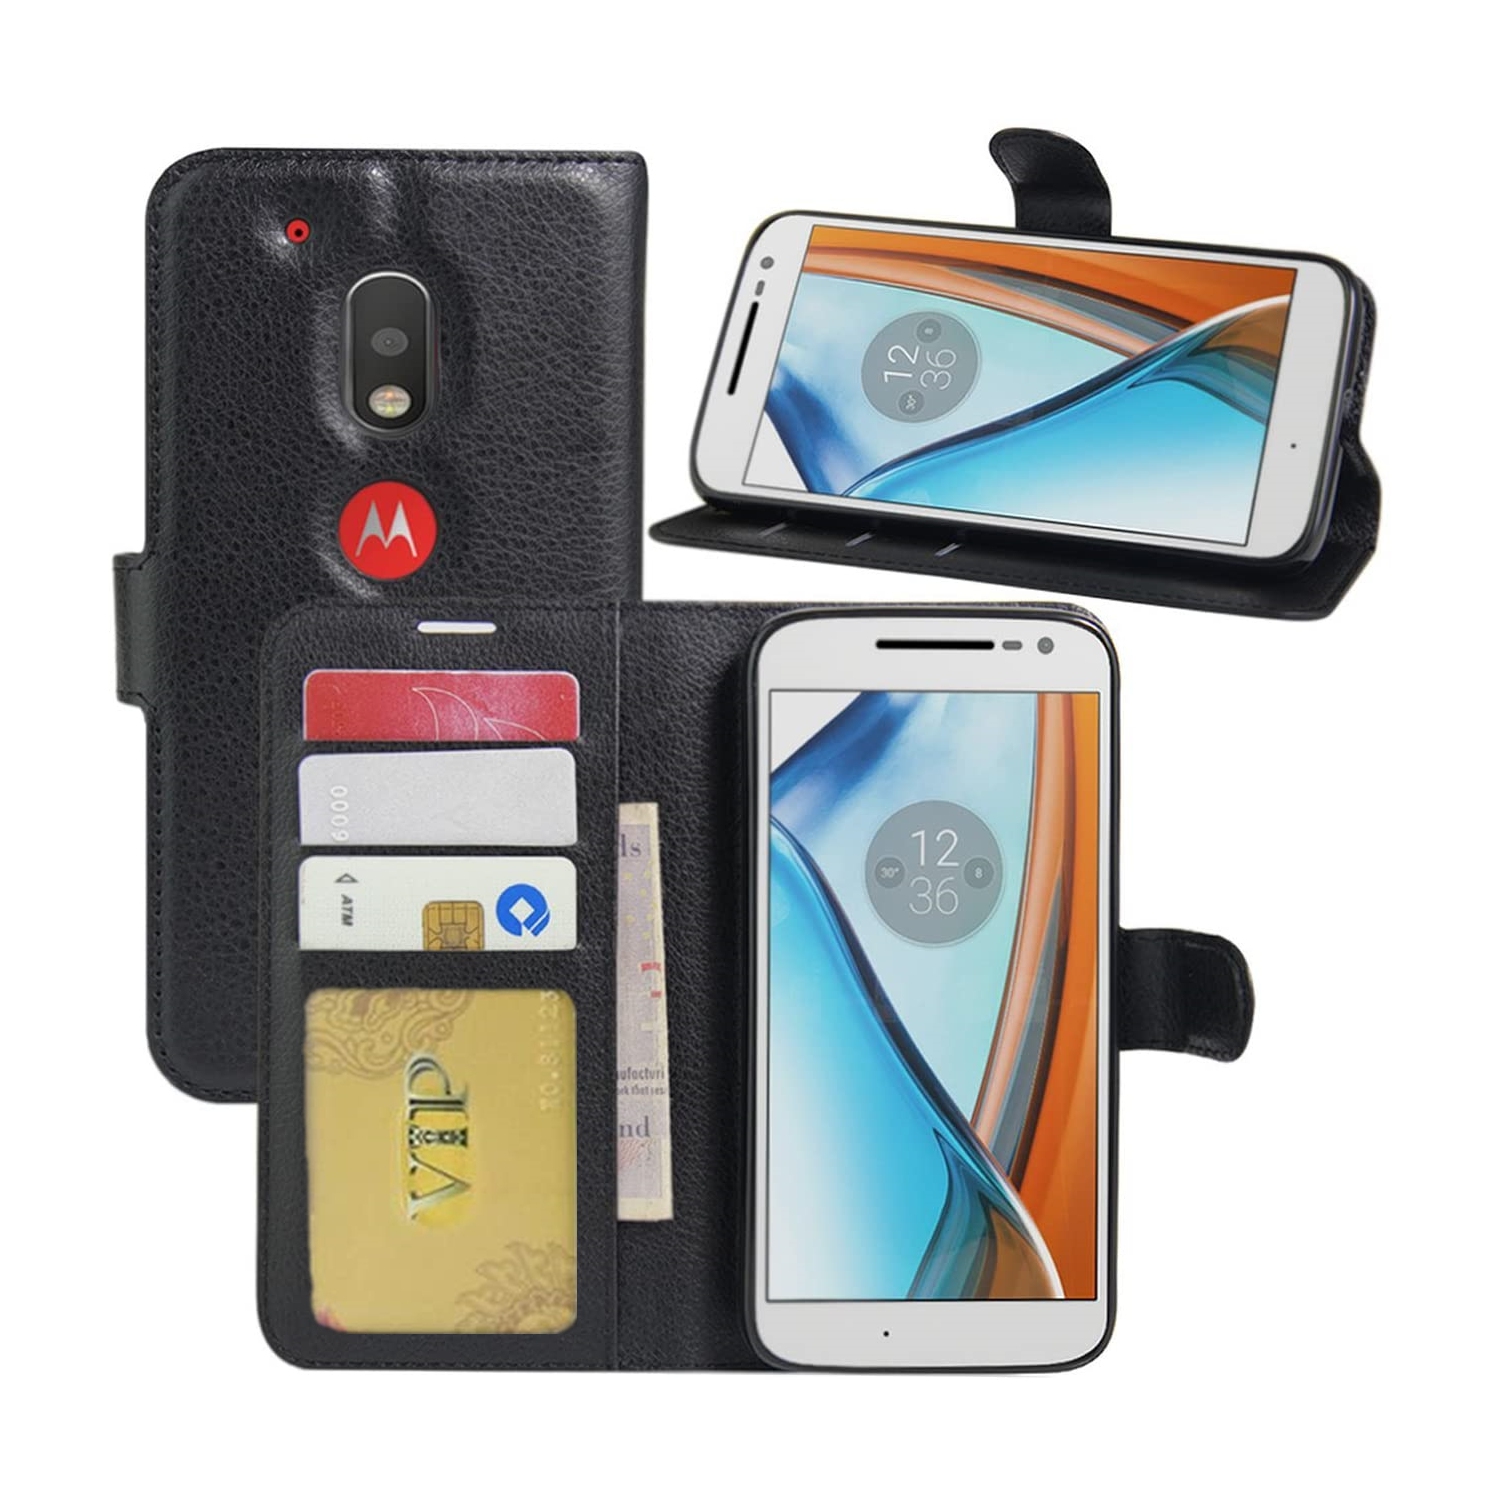 【CSmart】 Magnetic Card Slot Leather Folio Wallet Flip Case Cover for Motorola Moto G6 Play, Black